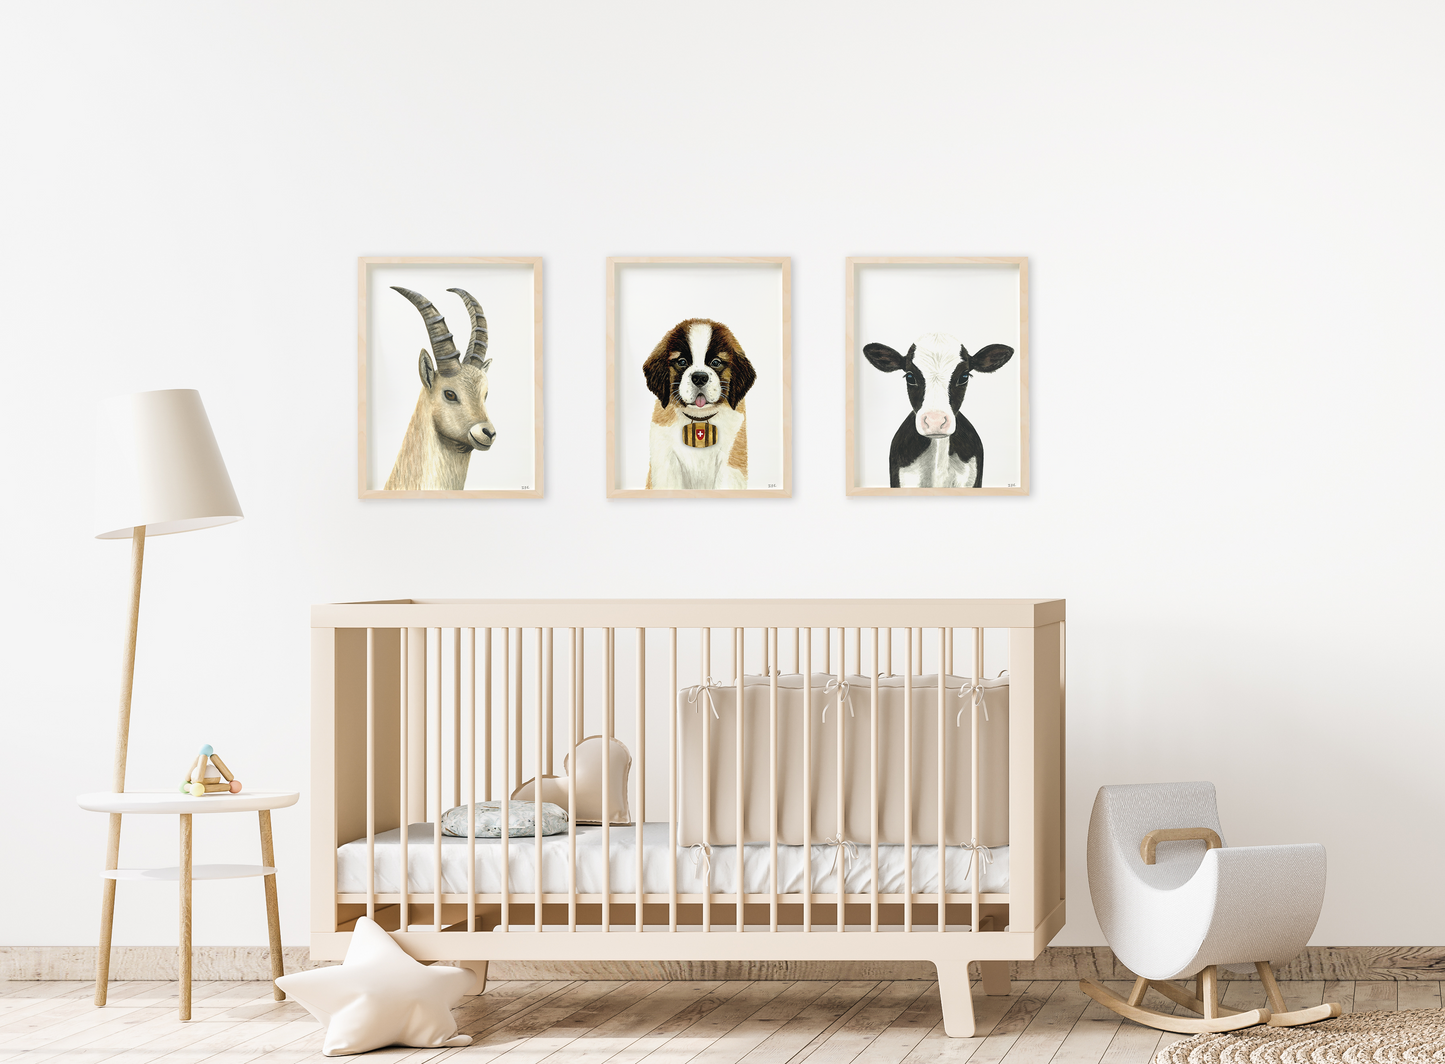 Set of 3 Swiss animal prints in a nursery: ibex, Saint Bernard, cow